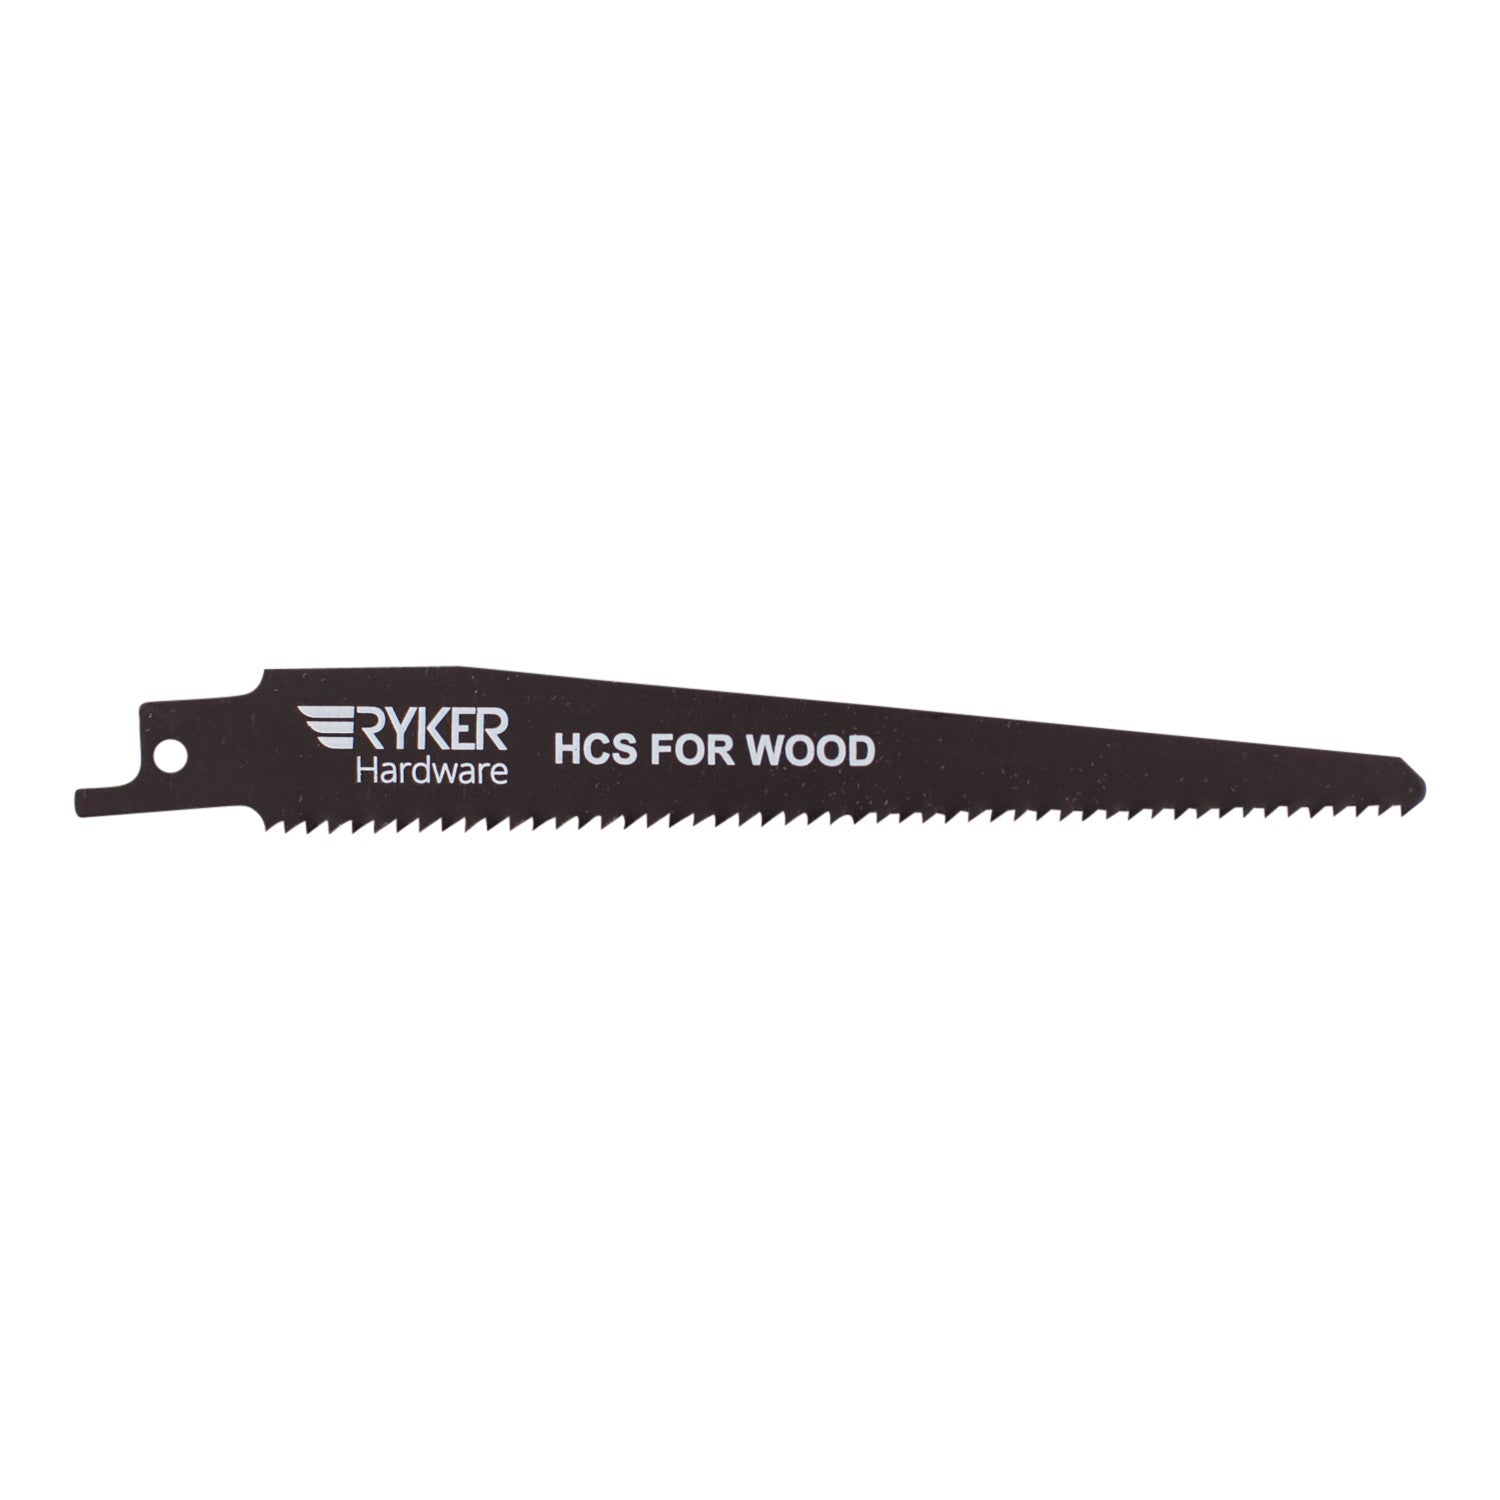 caseypowell - 10 - Reciprocating Sawzall Blades for Wood - Saw Blade - Ryker Hardware